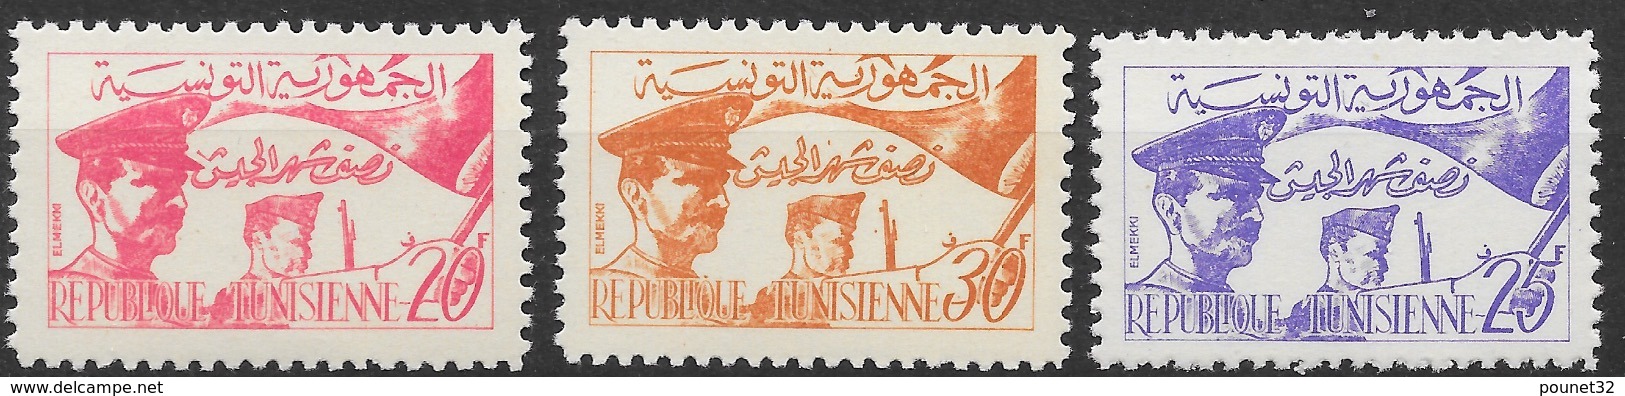 TUNISIE REPUBLIQUE TUNISIENNE SERIE N° 444/446 NEUVE ** GOMME SANS CHARNIERE - Tunisia